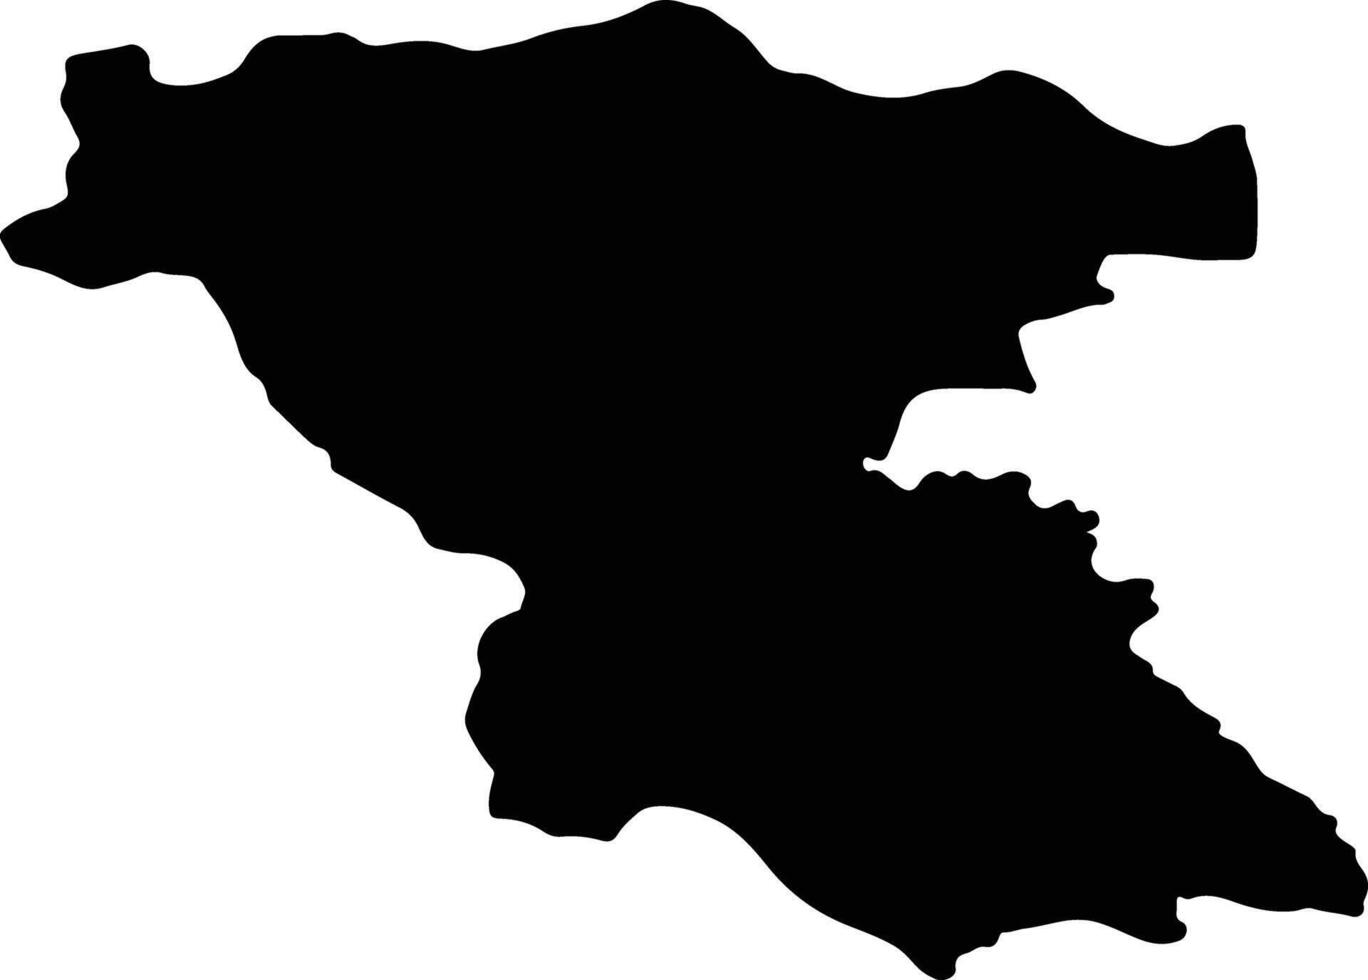 Burgas Bulgaria silhouette map vector